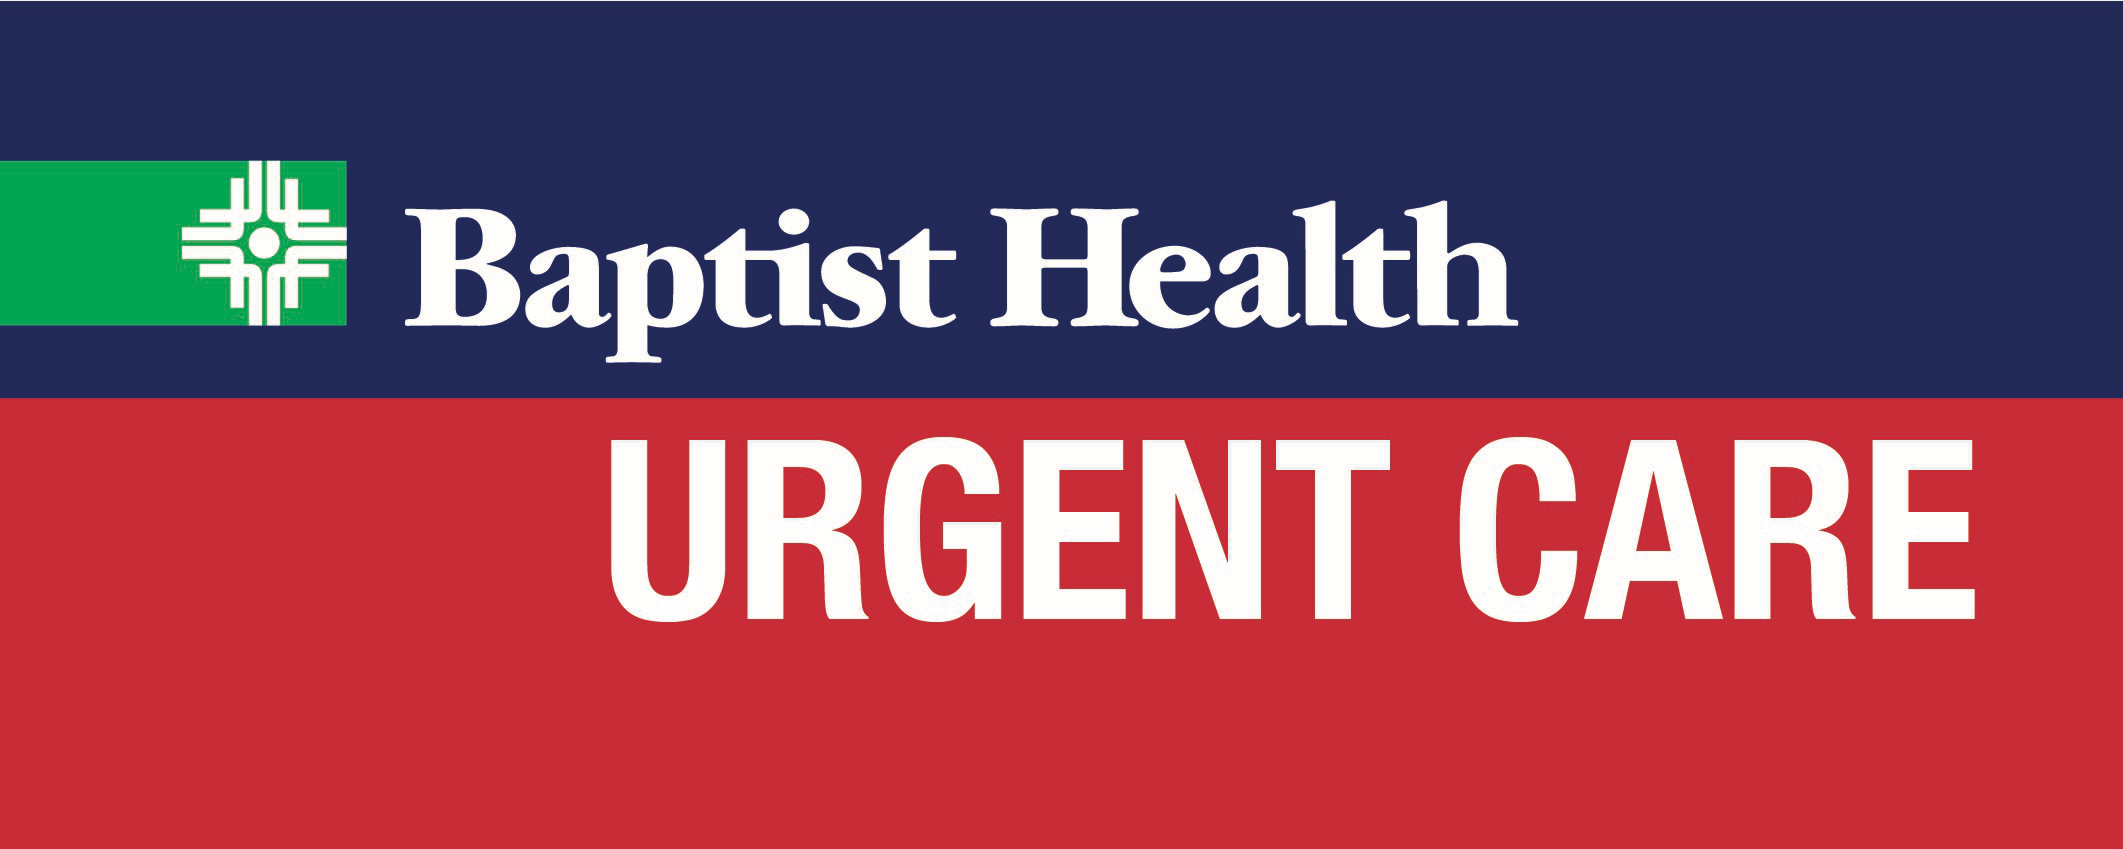 Baptist Health Urgent Care - Russellville Main St Logo